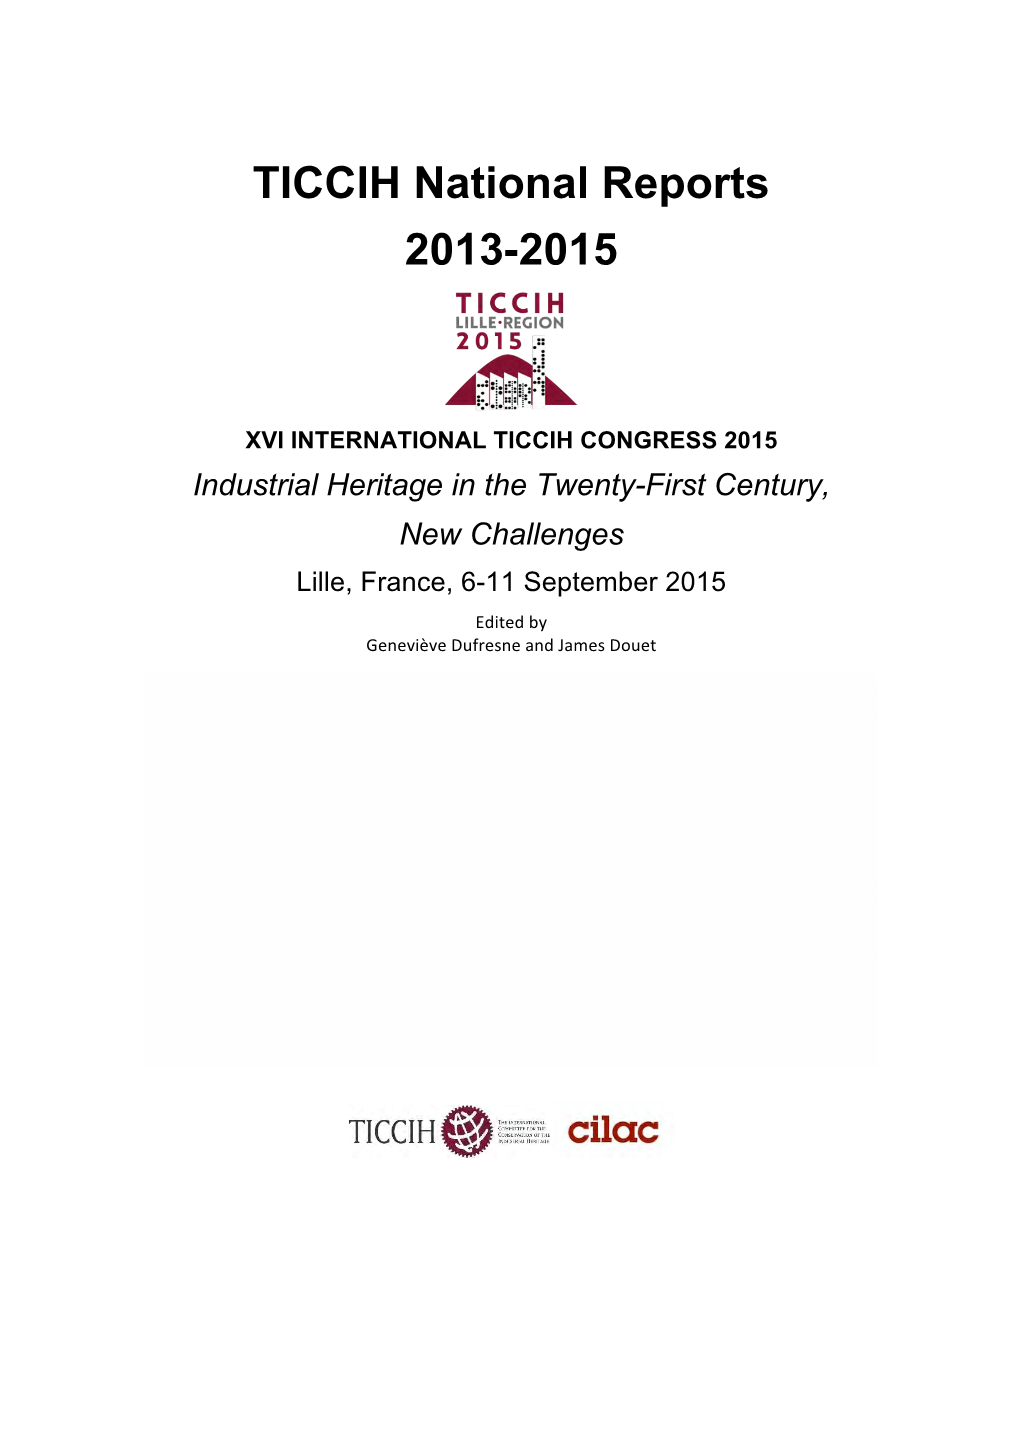 TICCIH National Reports 2013-2015